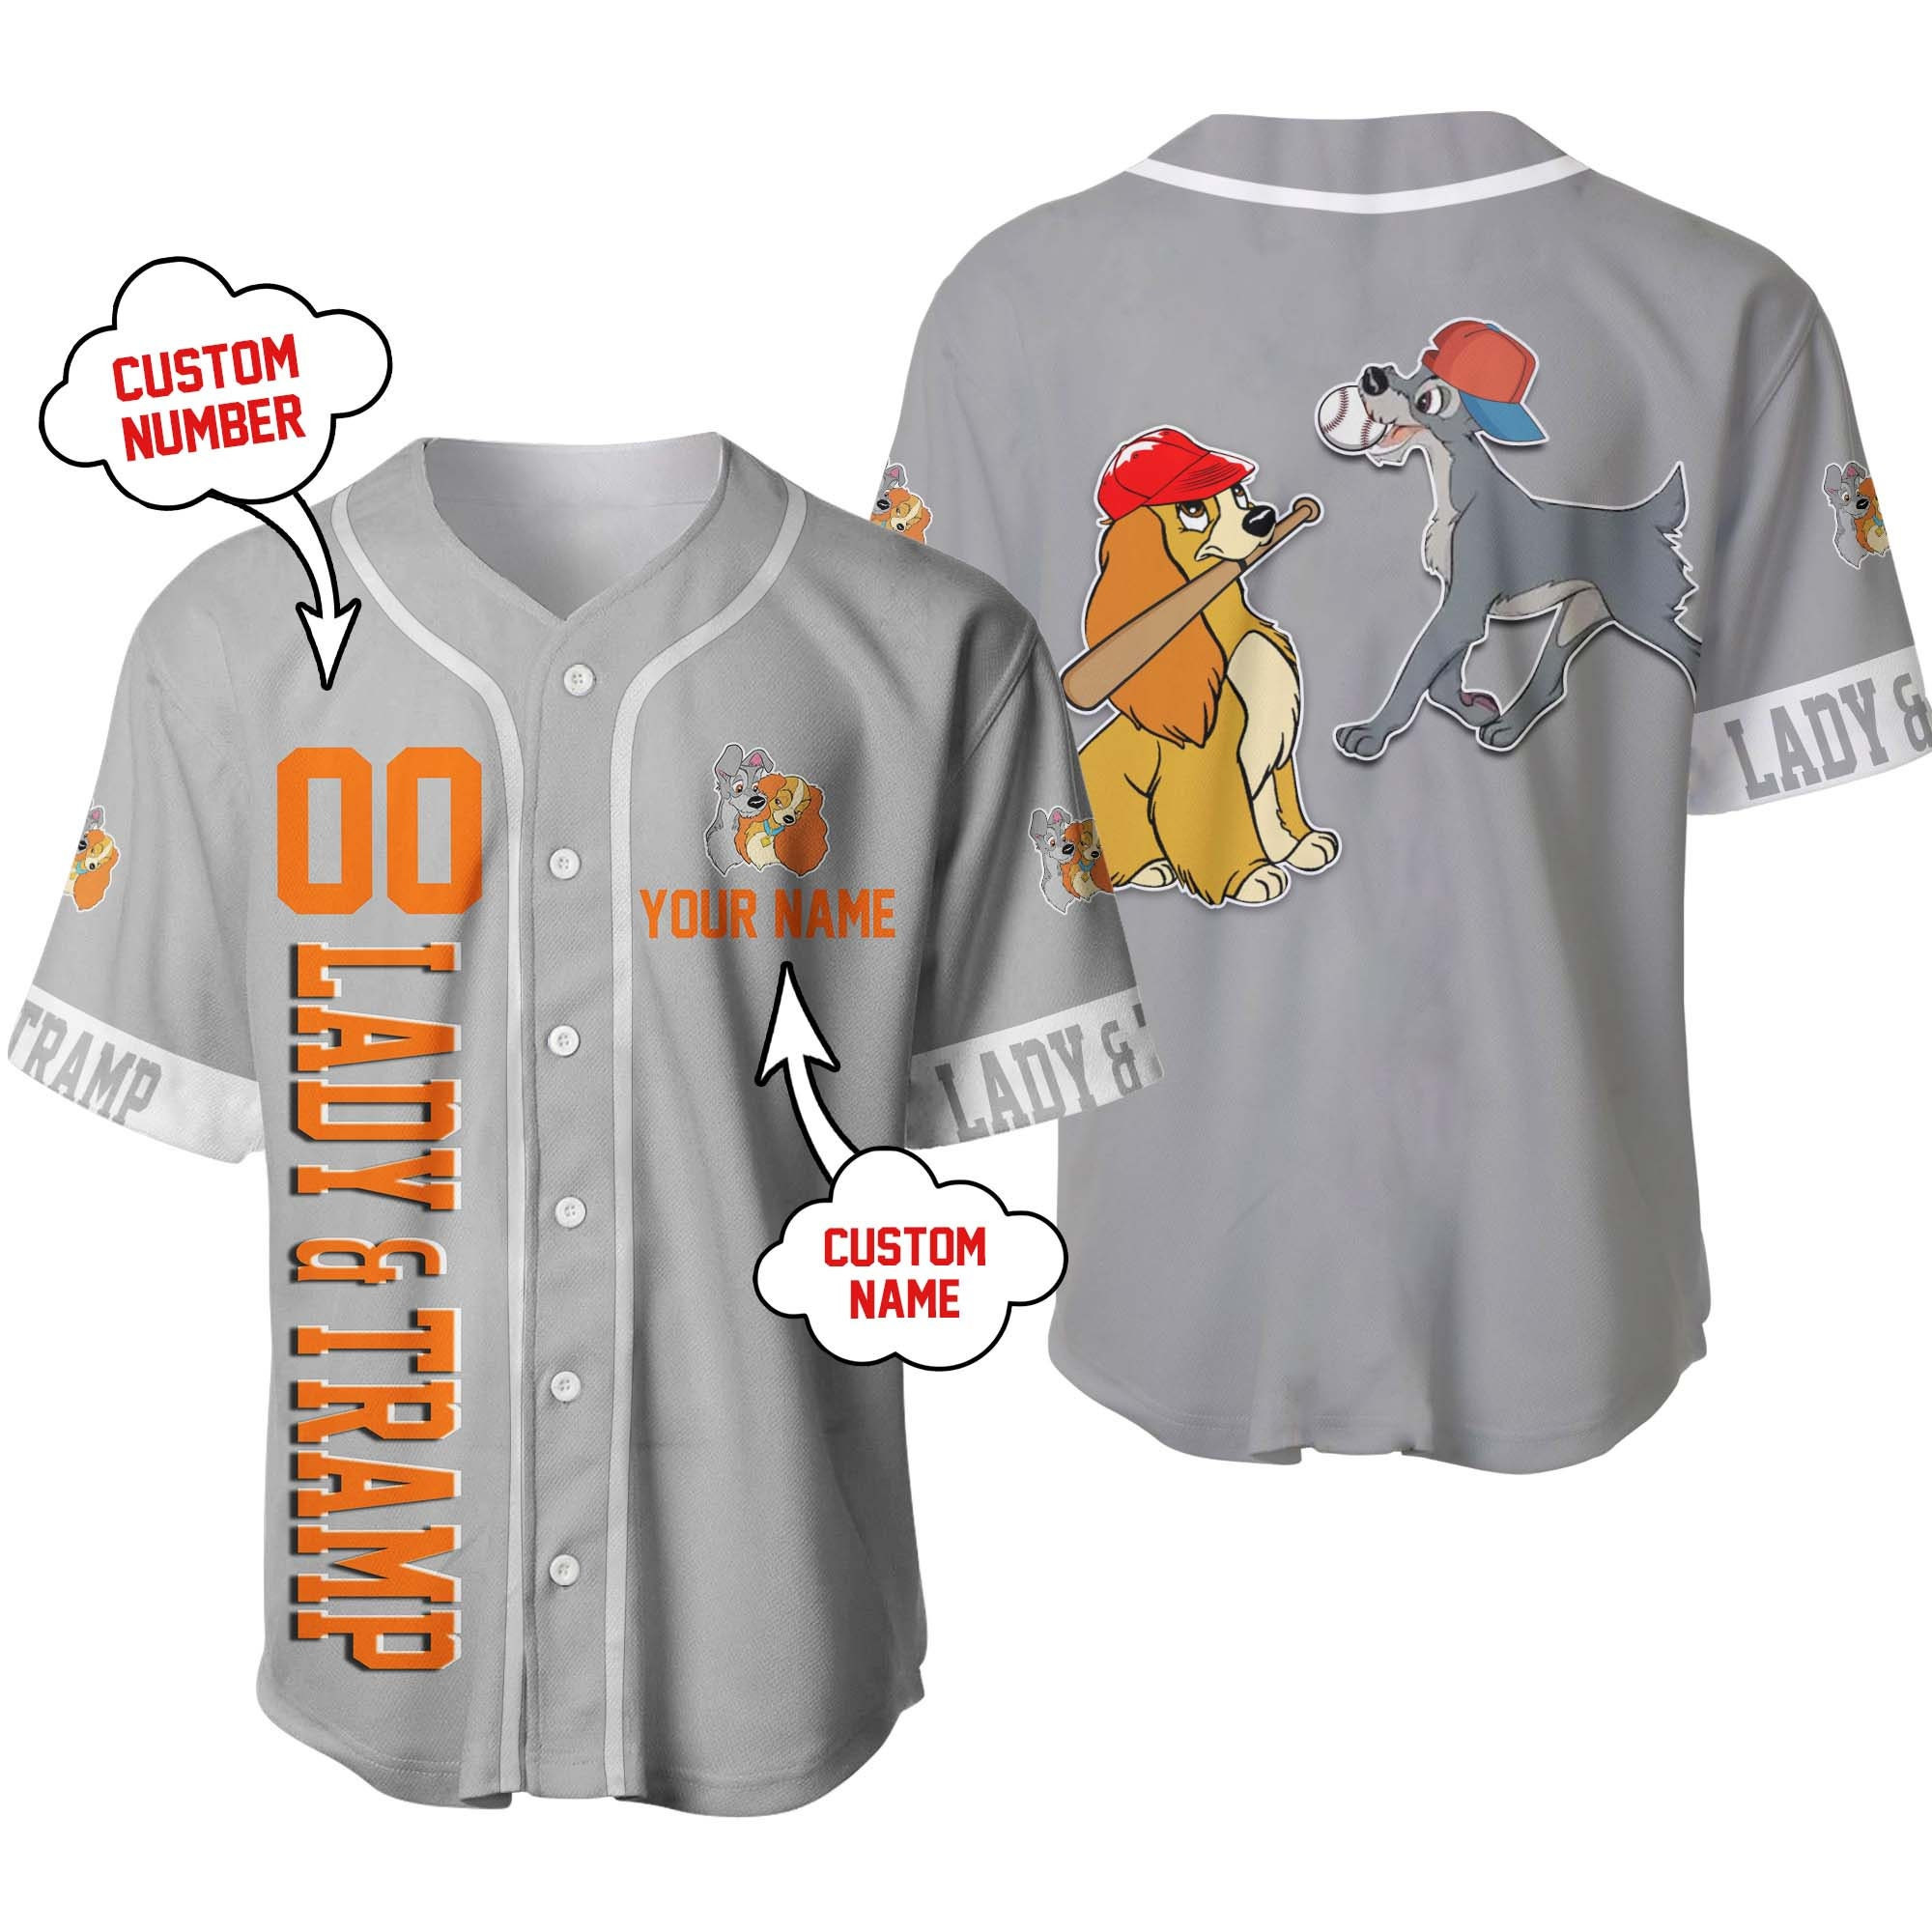 Lady The Tramp Gray Disney Personalized Unisex Cartoon Custom Baseball Jersey, Unisex Jersey Shirt for Men Women